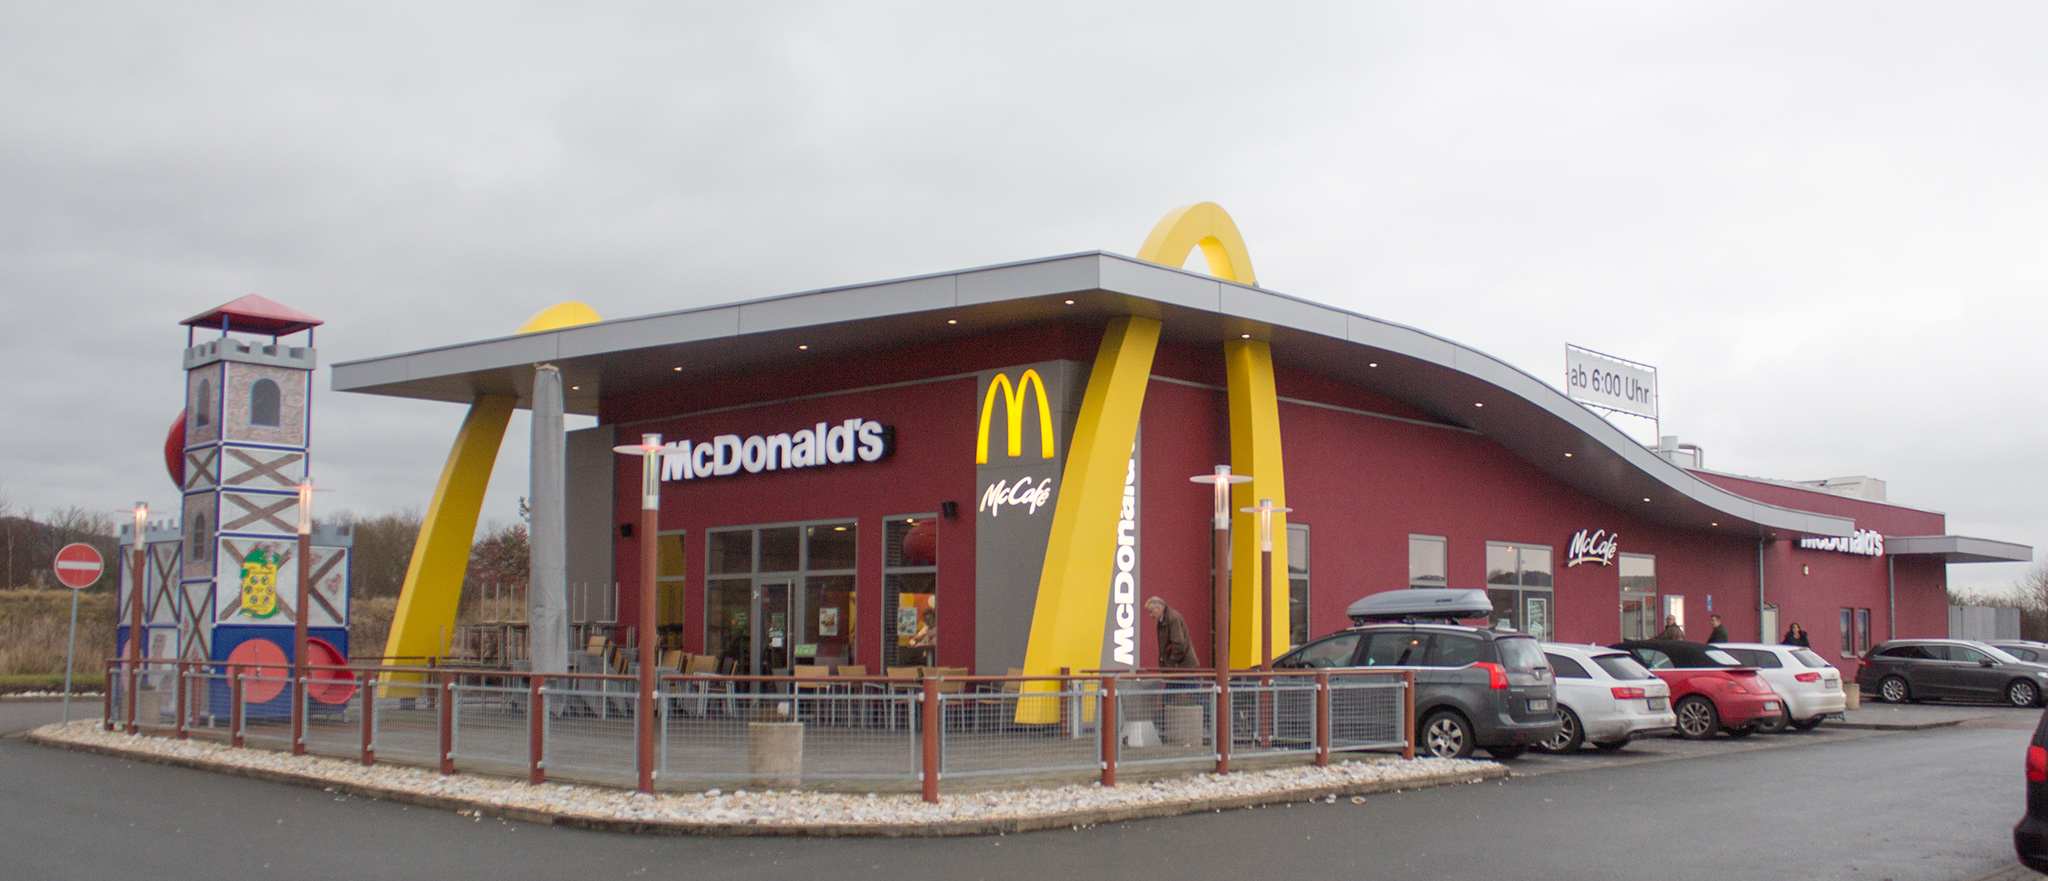 Das McDonald’s-Restaurant in Himmelkron (Kulmbacher Straße)